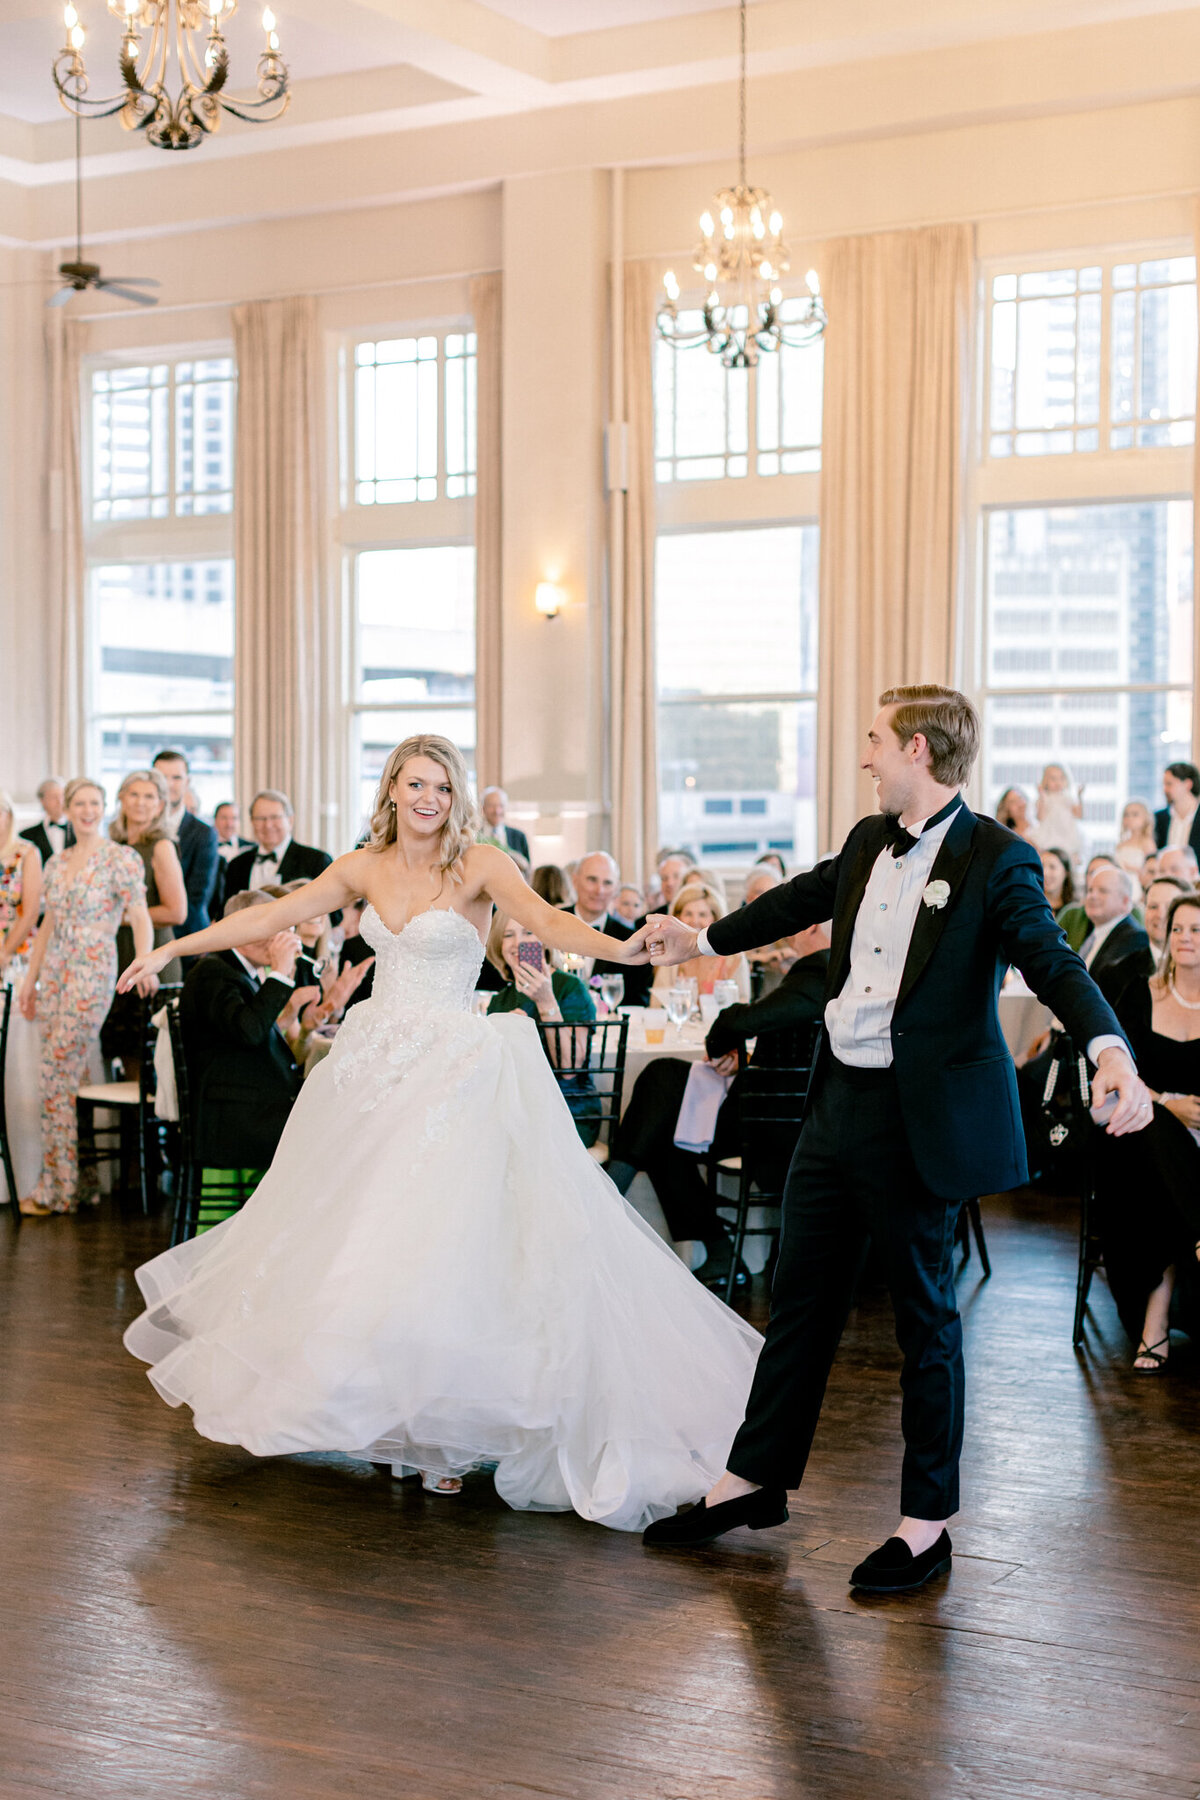 Shelby & Thomas's Wedding at HPUMC The Room on Main | Dallas Wedding Photographer | Sami Kathryn Photography-194